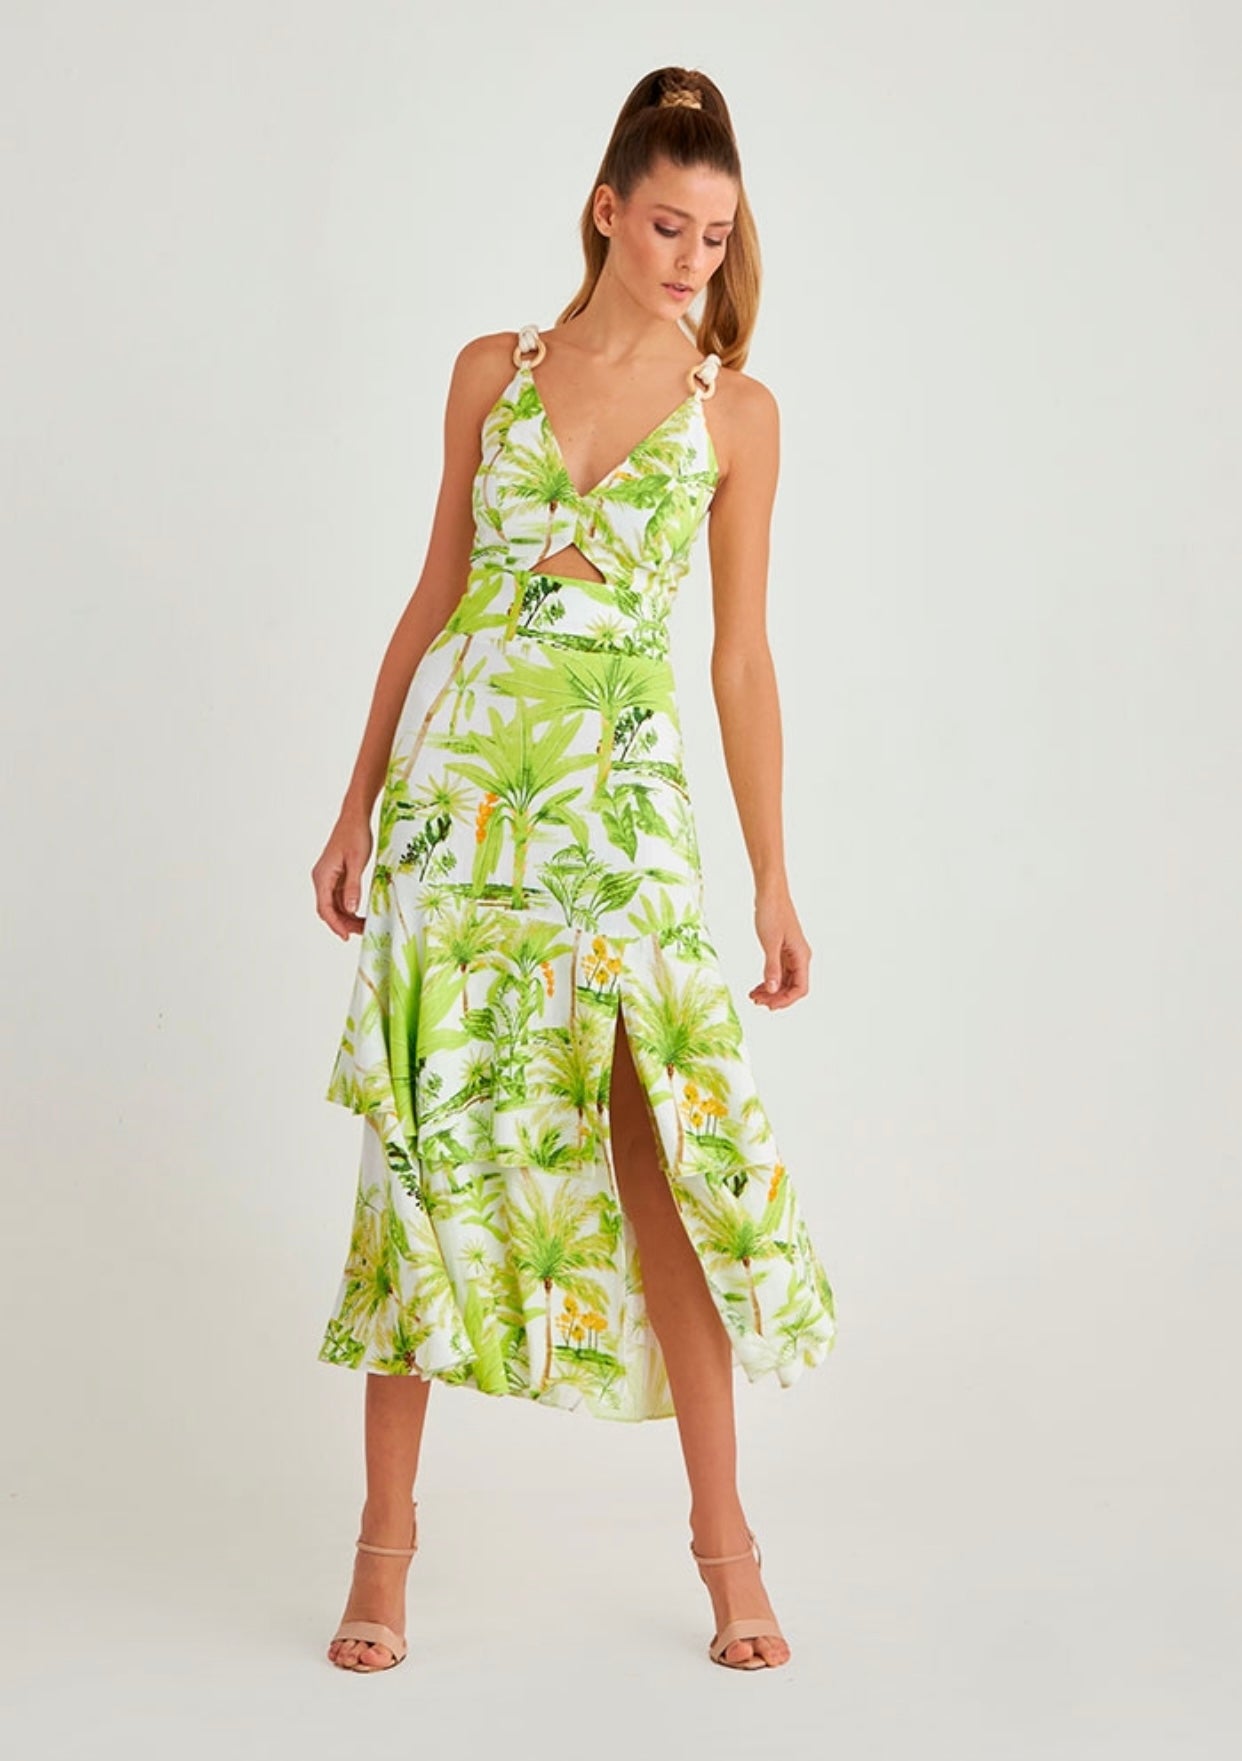 SALOME Tropical Print Midi Dress - FINAL SALE